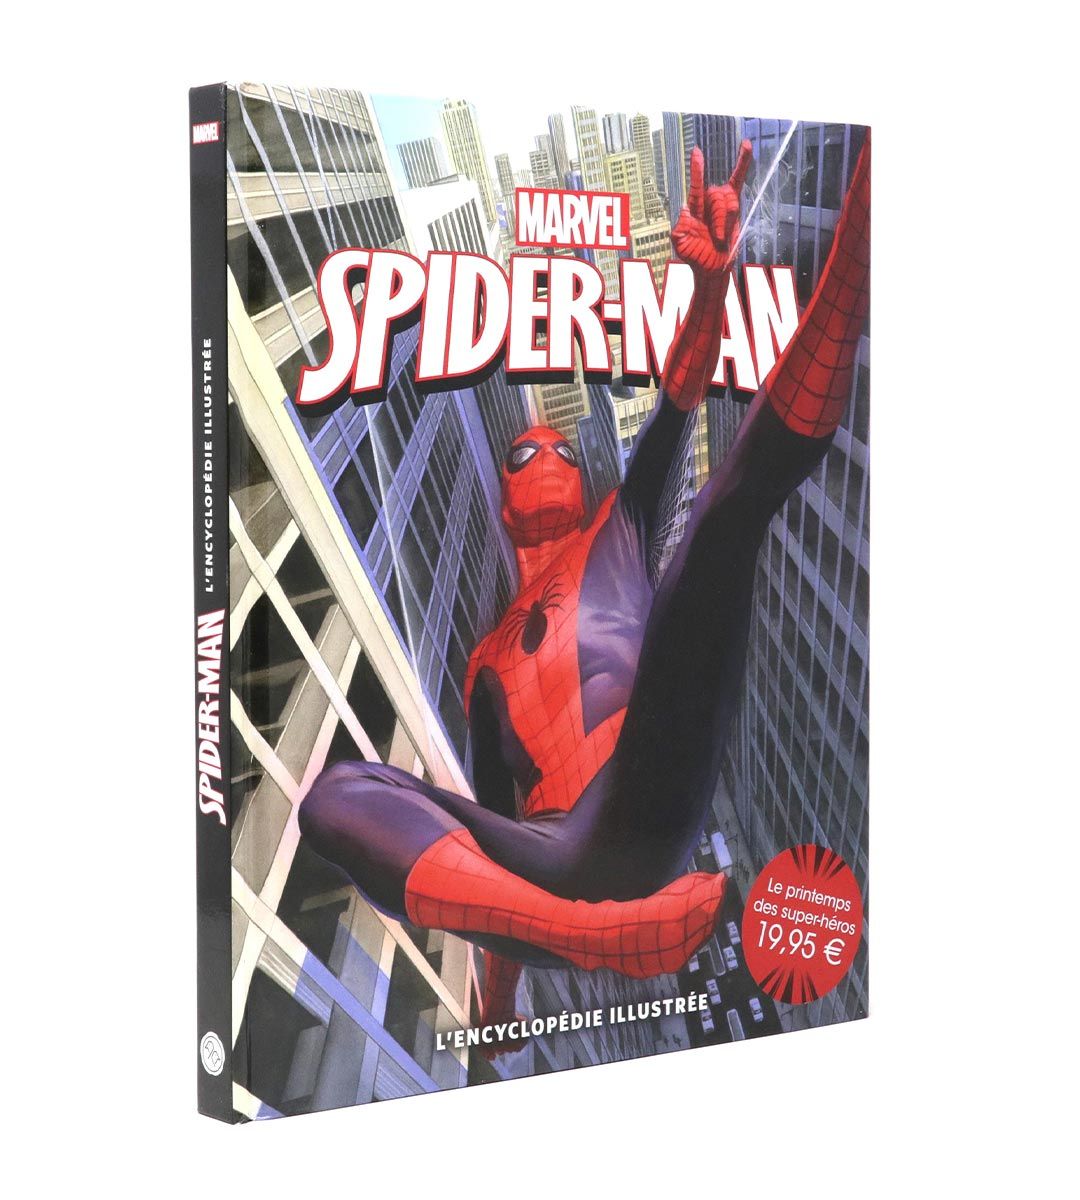 Spider-Man, l’encyclopédie illustrée